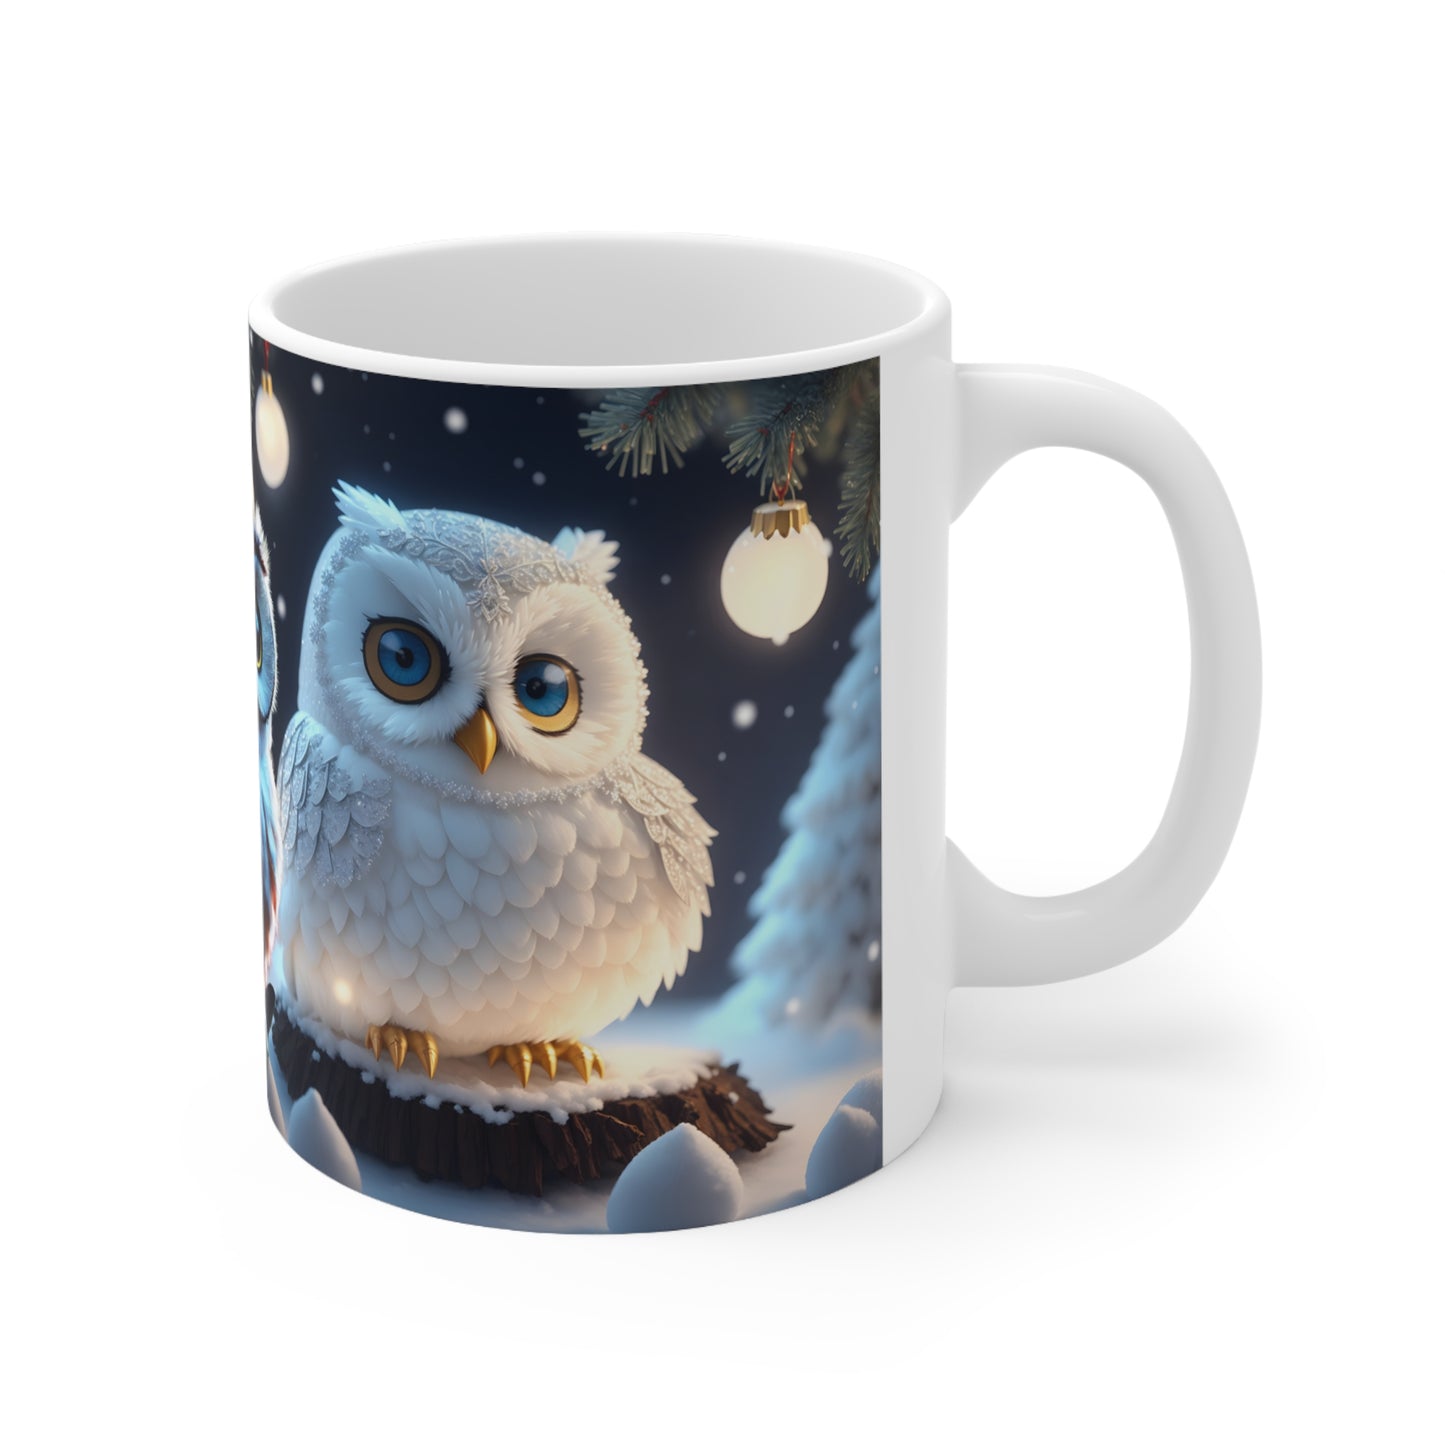 WHITE OWLS and BABY Owl Mug - Owls Lovers Mug - Mugscity - Free Shipping